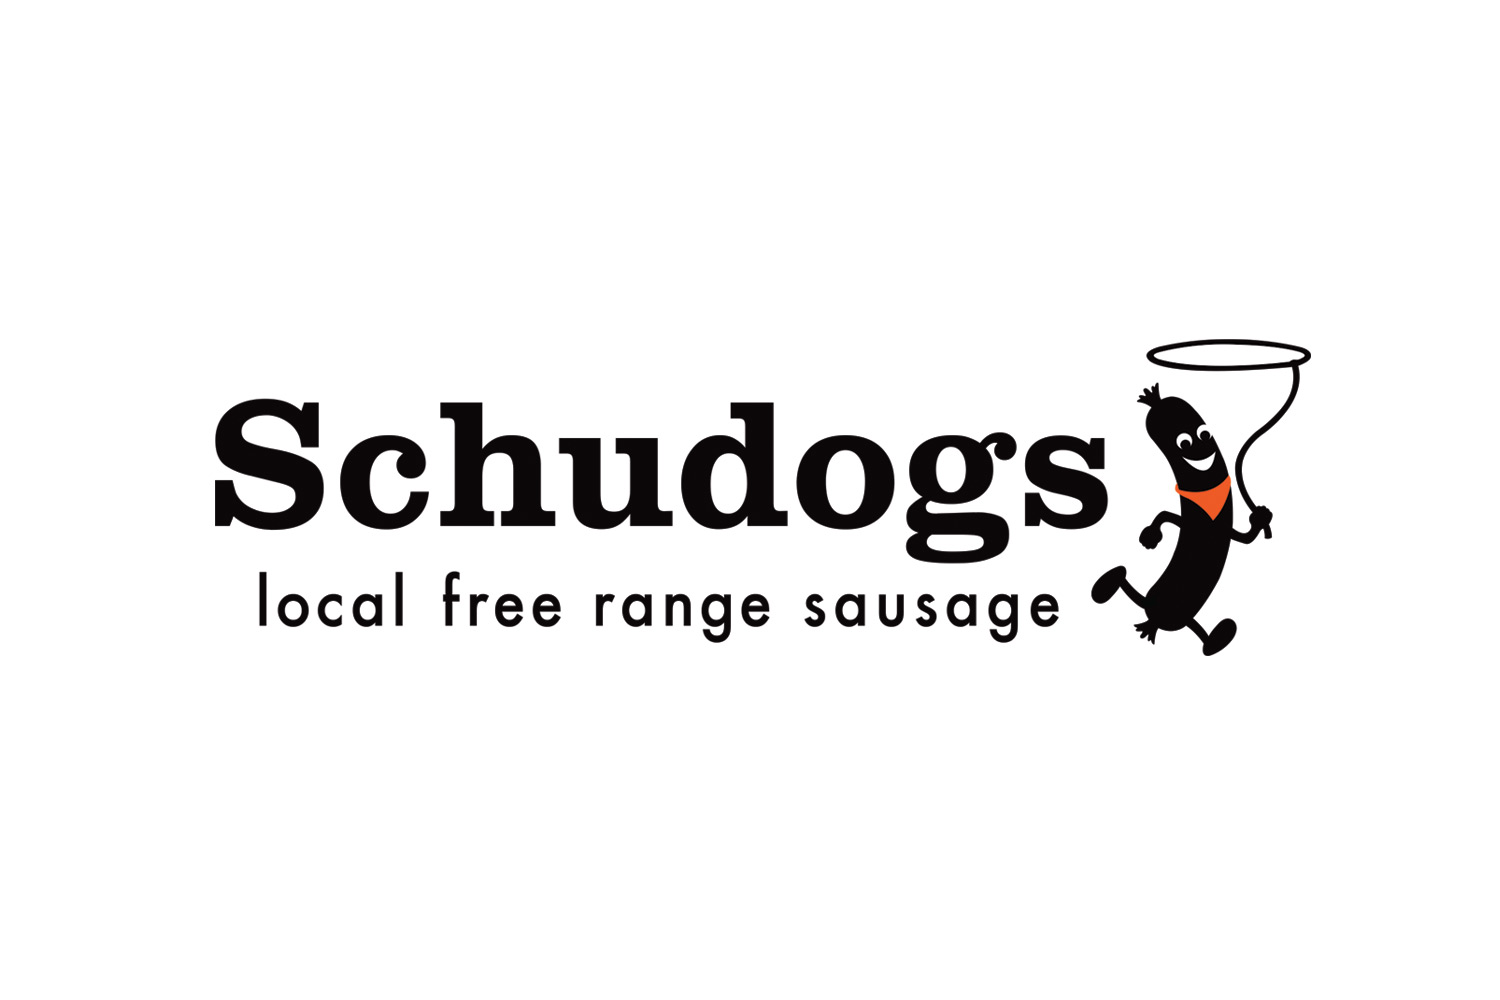 food truck featuring free range sausage